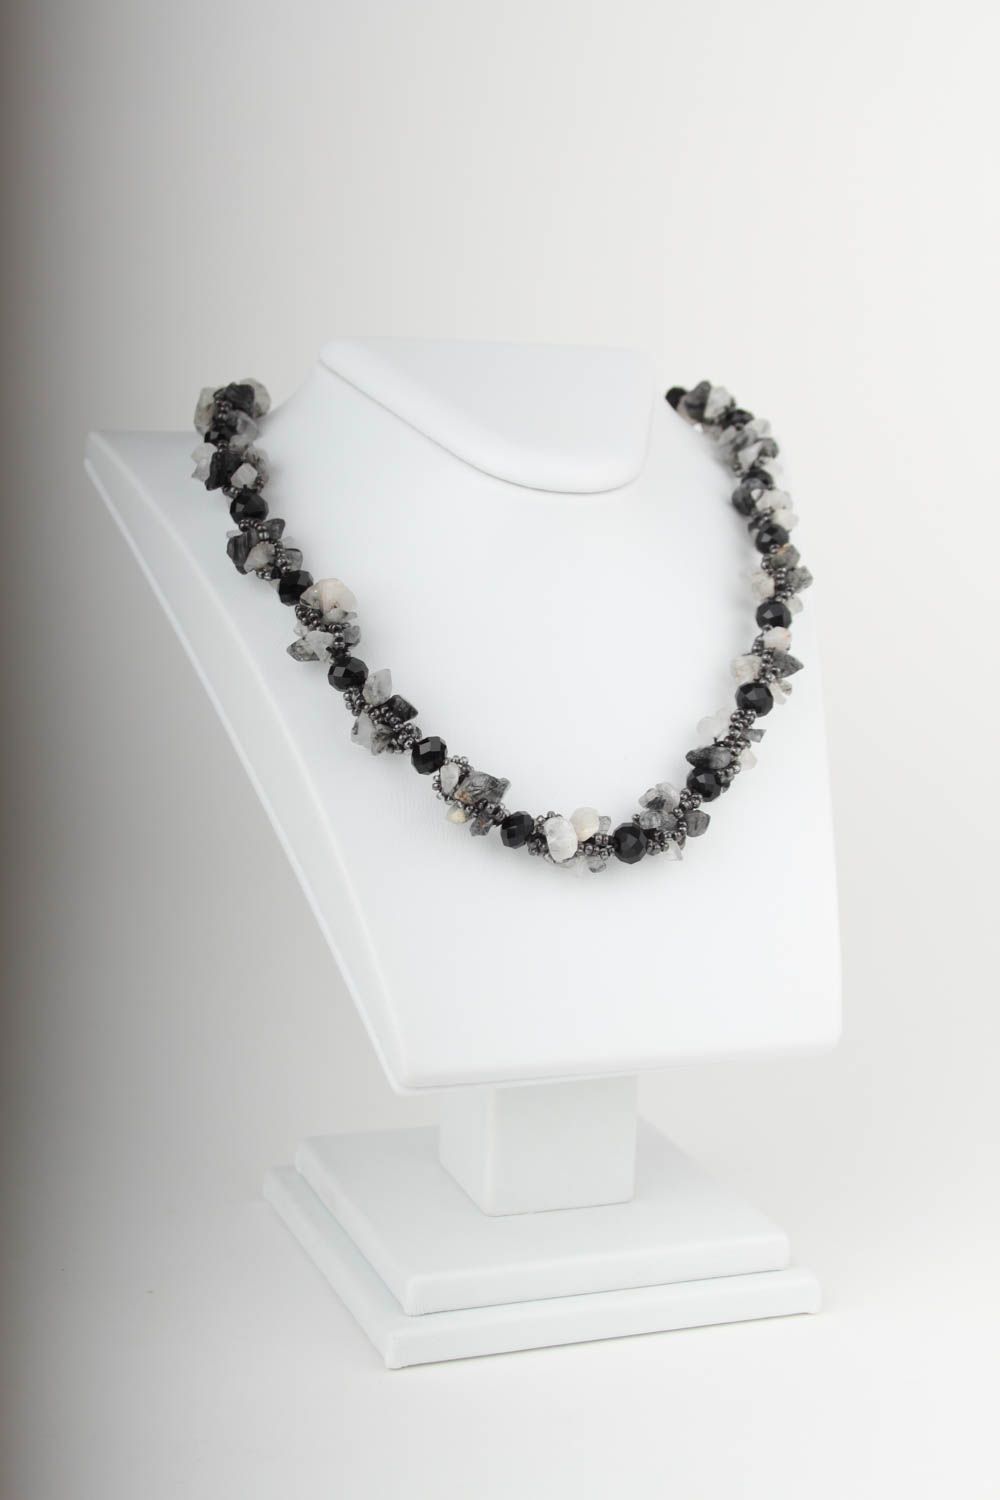 Handmade designer necklace handmade necklace with natural stones stylish jewelry photo 1